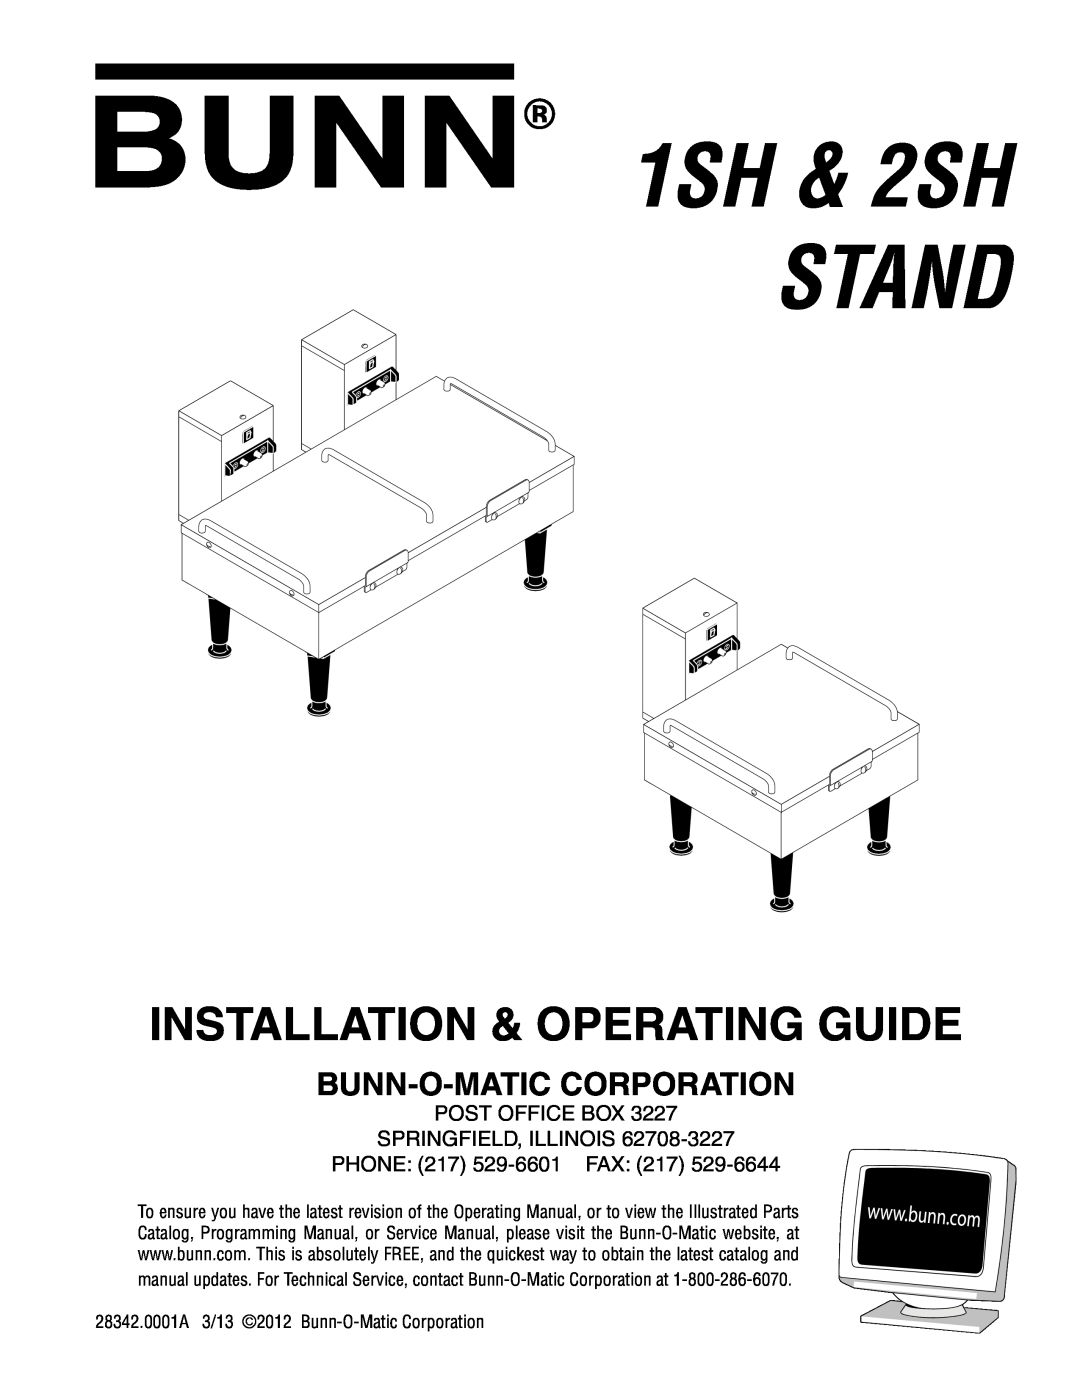 Bunn service manual 1SH & 2SH STAND, Installation & Operating Guide, Bunn-O-Maticcorporation 